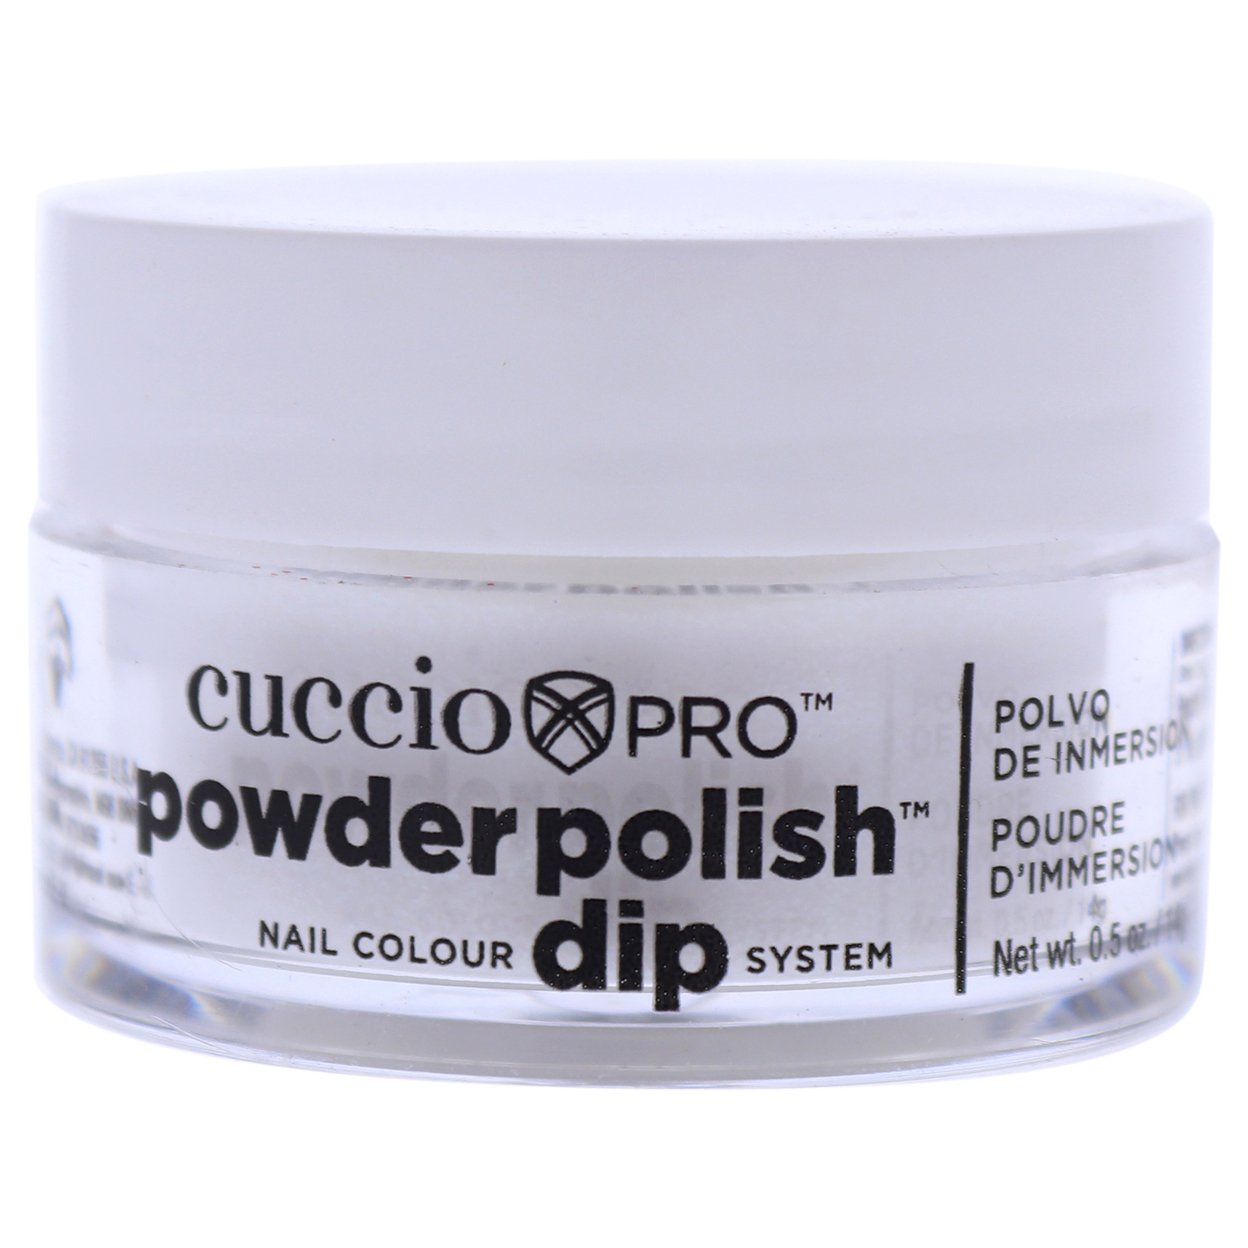 Cuccio Colour Pro Powder Polish Nail Colour Dip System - Bling Diamond Nail Powder 0.5 Oz